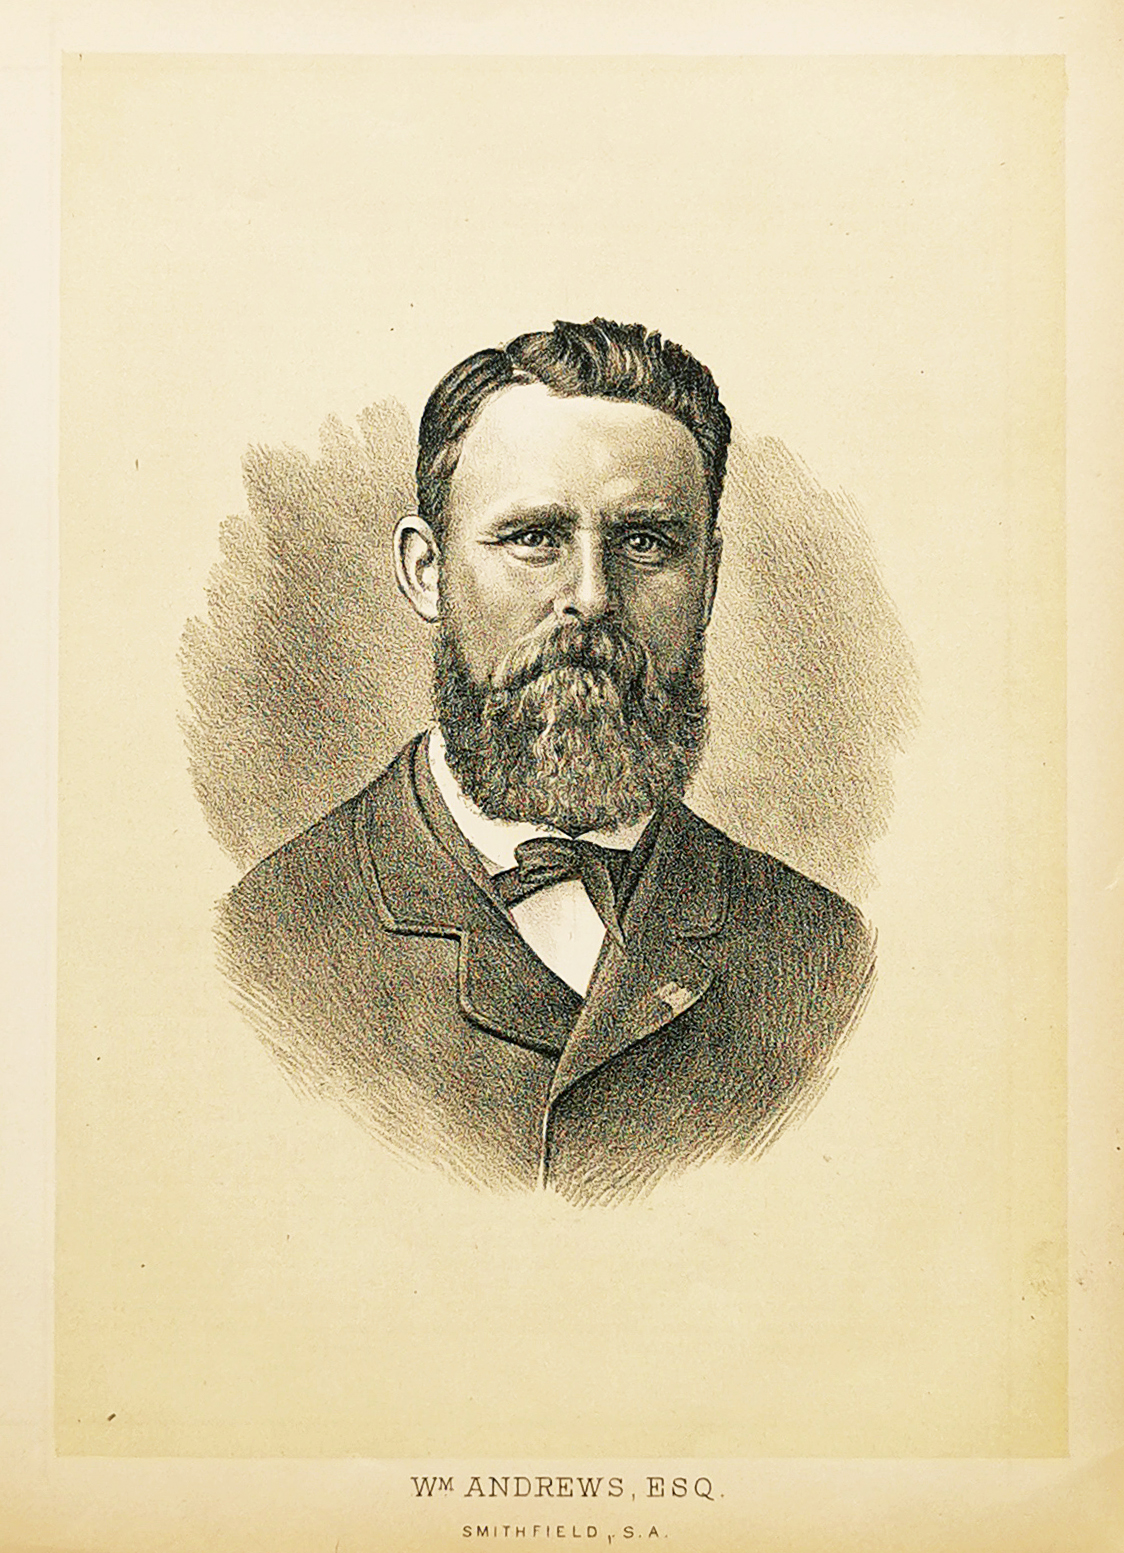 Wm. Andrews, Esq. Smithfield, S.A. - Antique Print from 1889